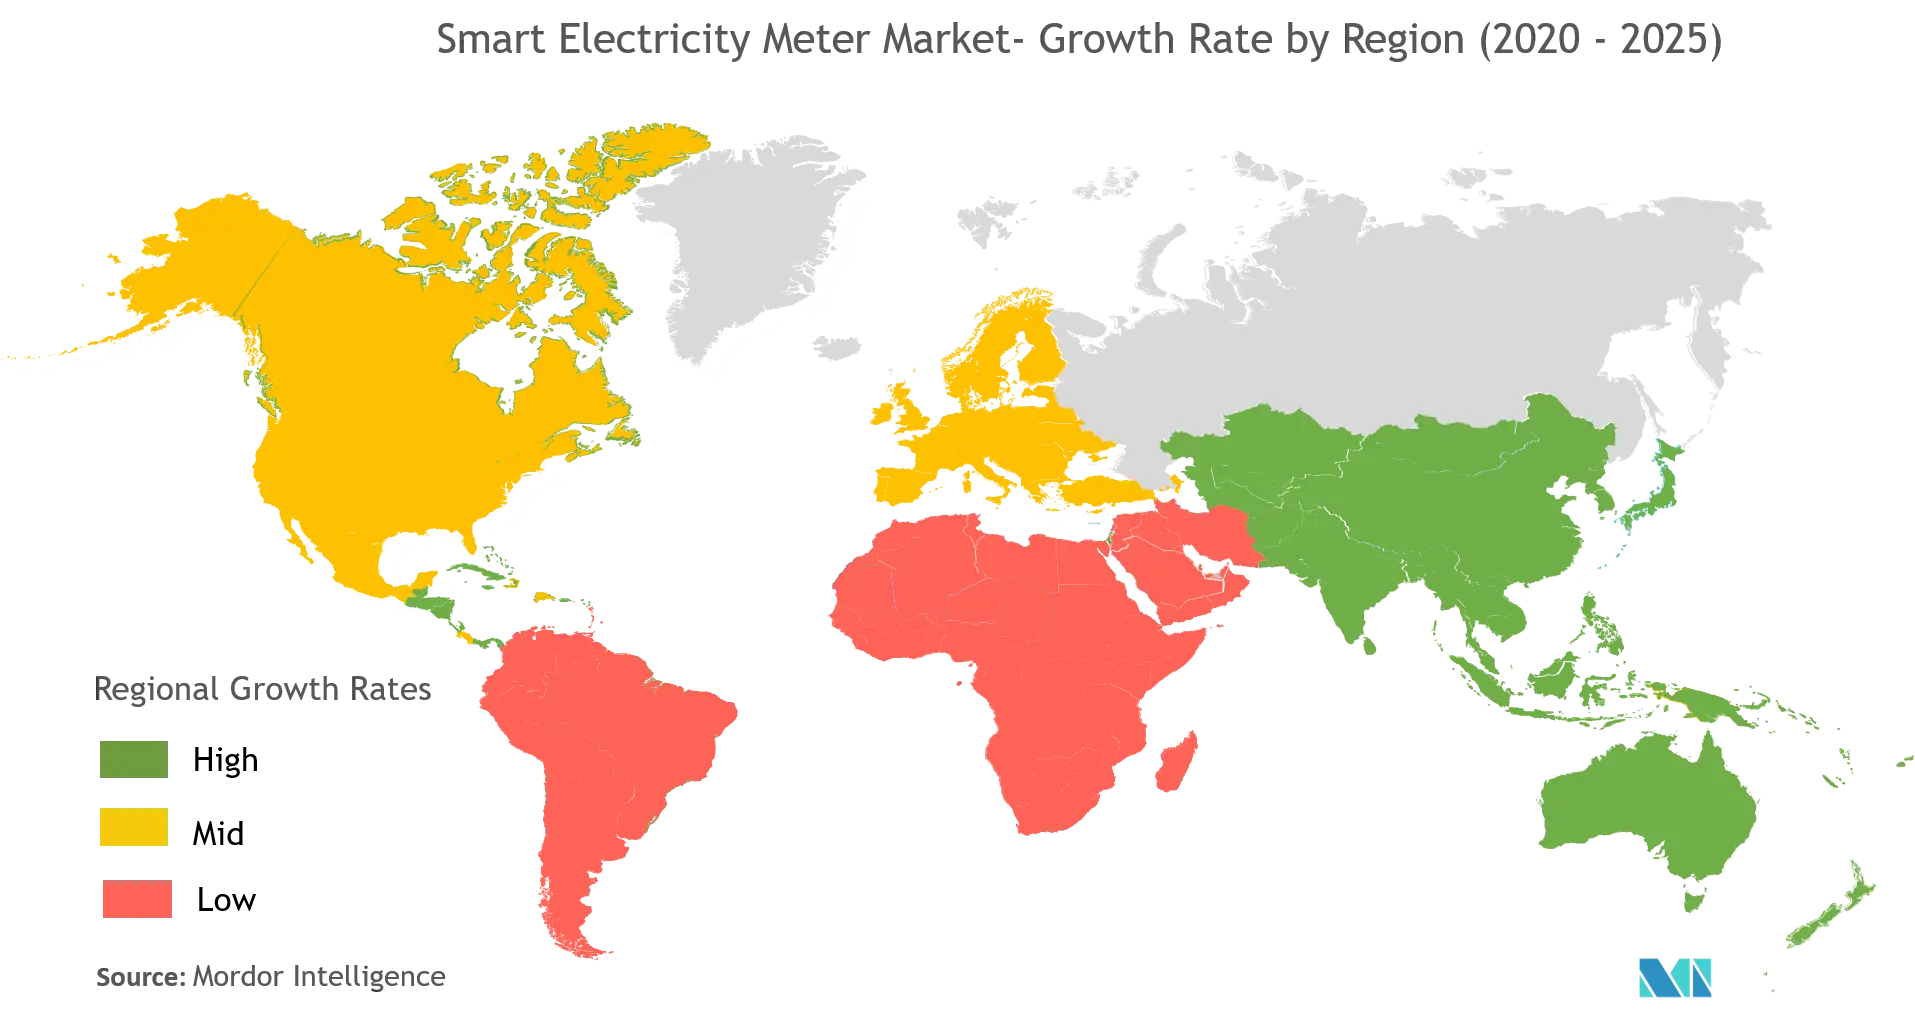 Smart Electricity Meter Market Growth